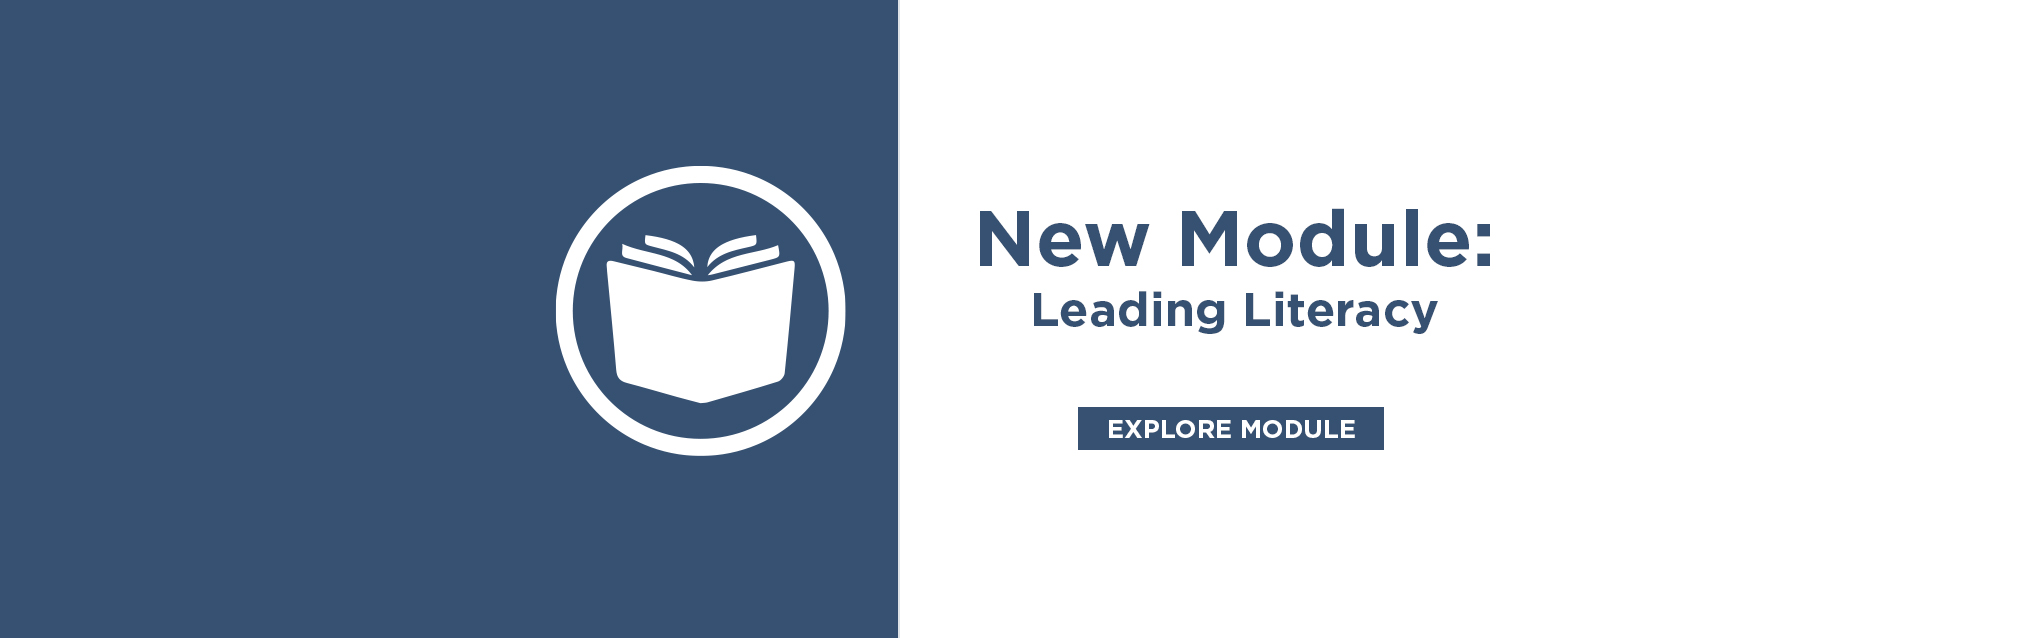 New Module: Leading Literacy